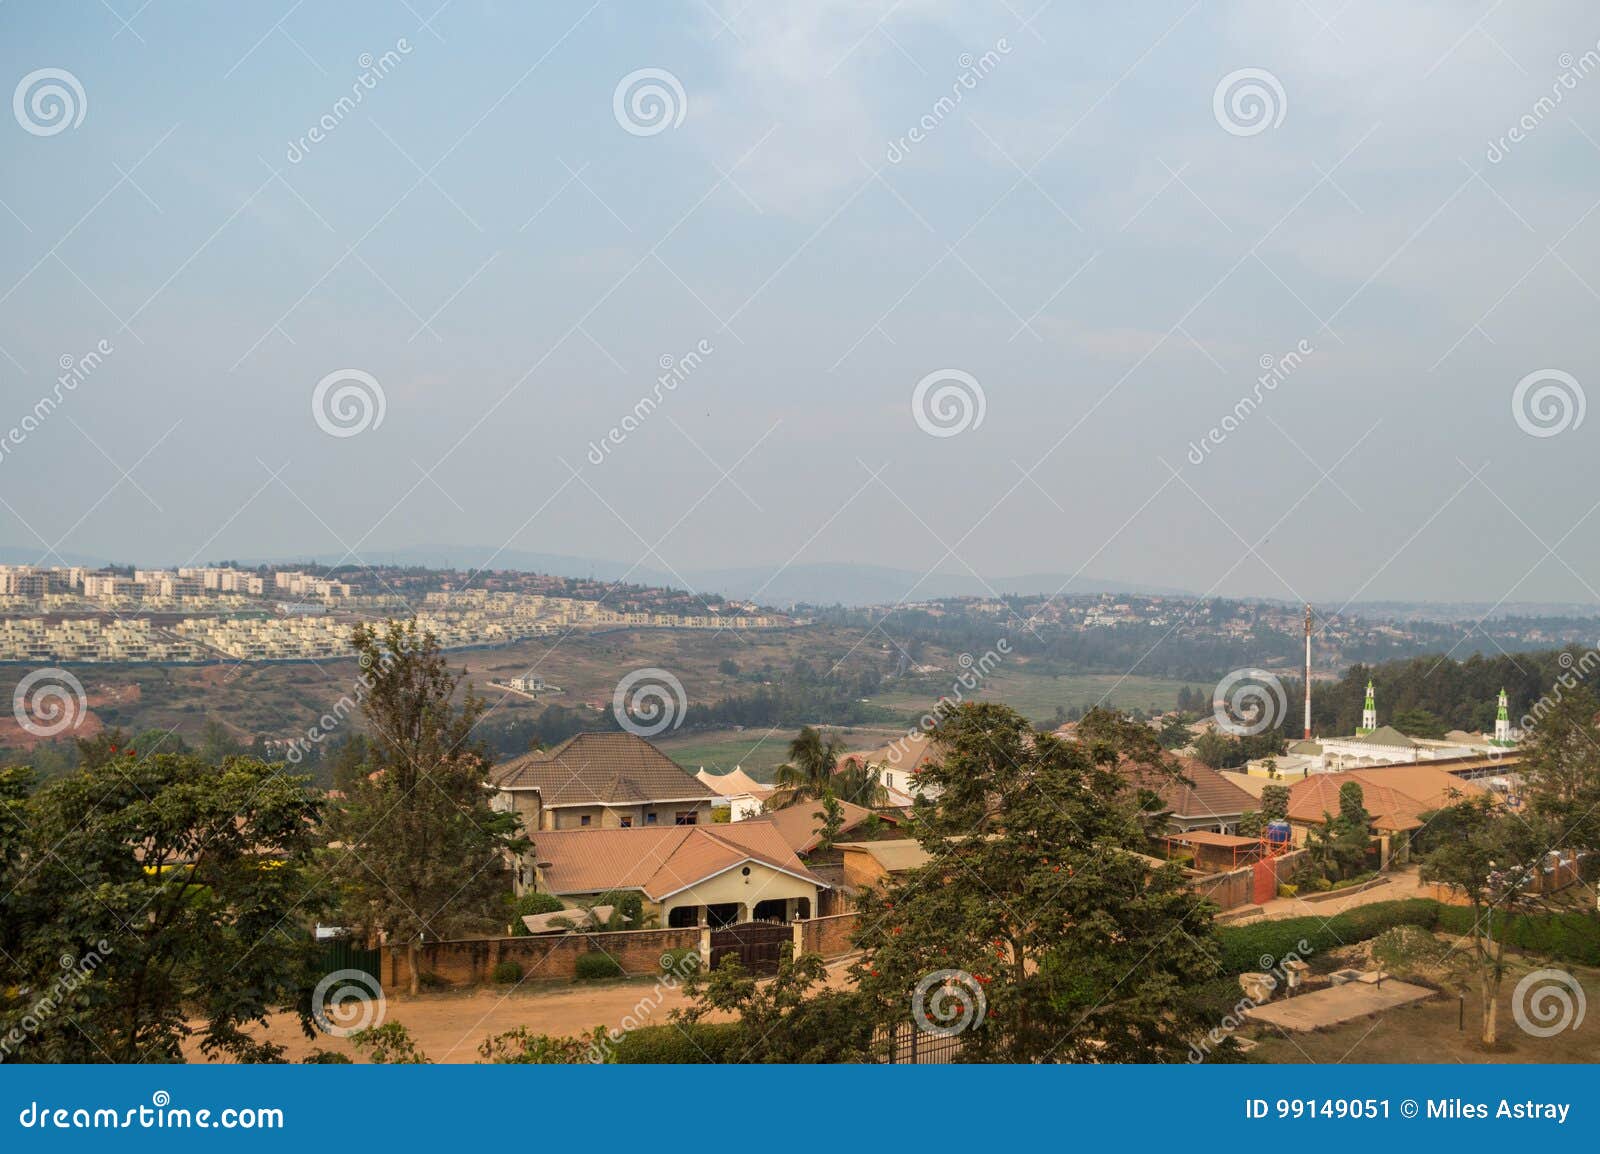 residential neighborhoods in kigali, rwanda